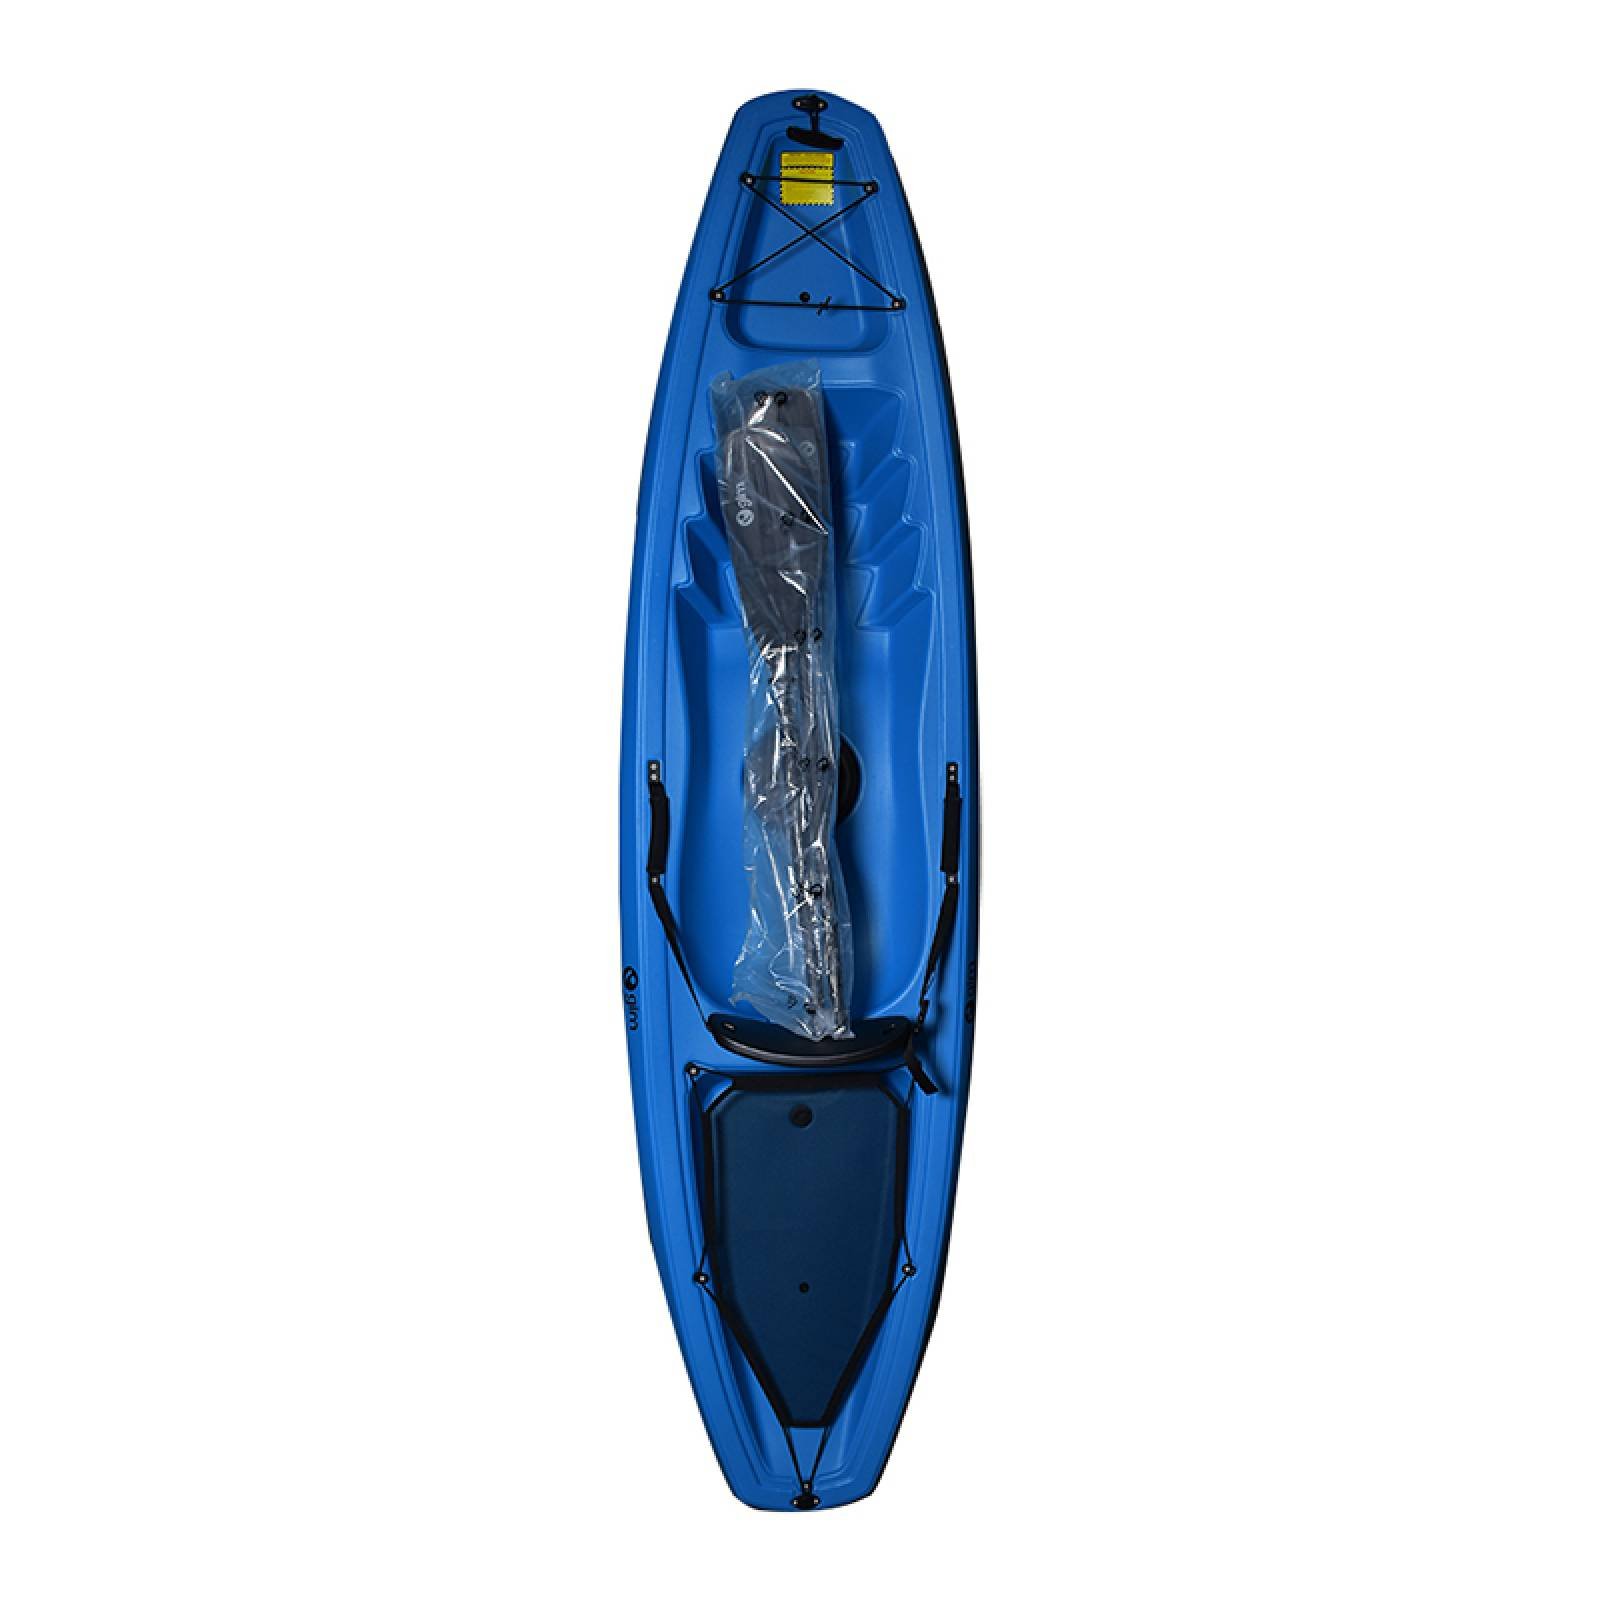 Kayak Polietileno 1 Persona 1 Remo 226cm 125Kg Azul Gimbel